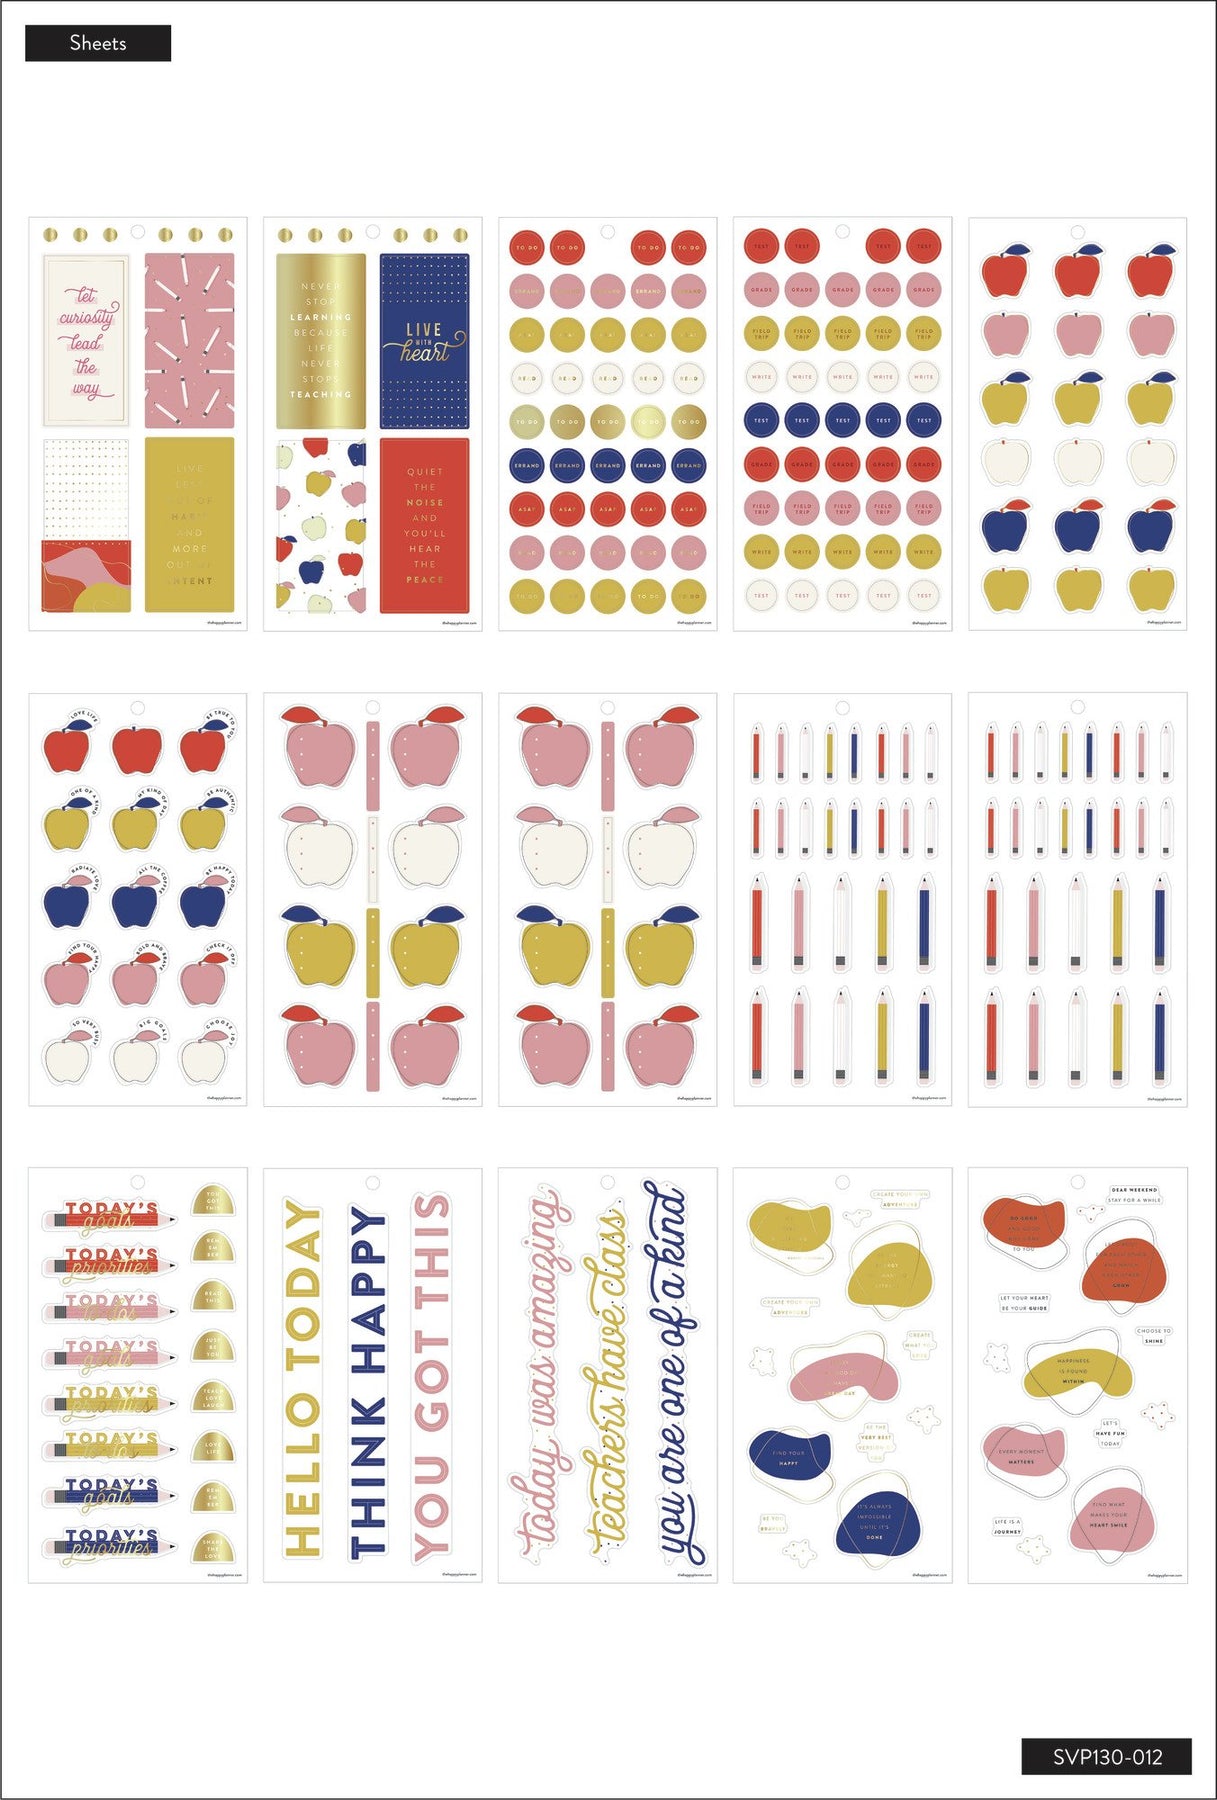 Sticko Primary Colors Block Alphabet Letter Stickers Planner Teacher  Scrapbook